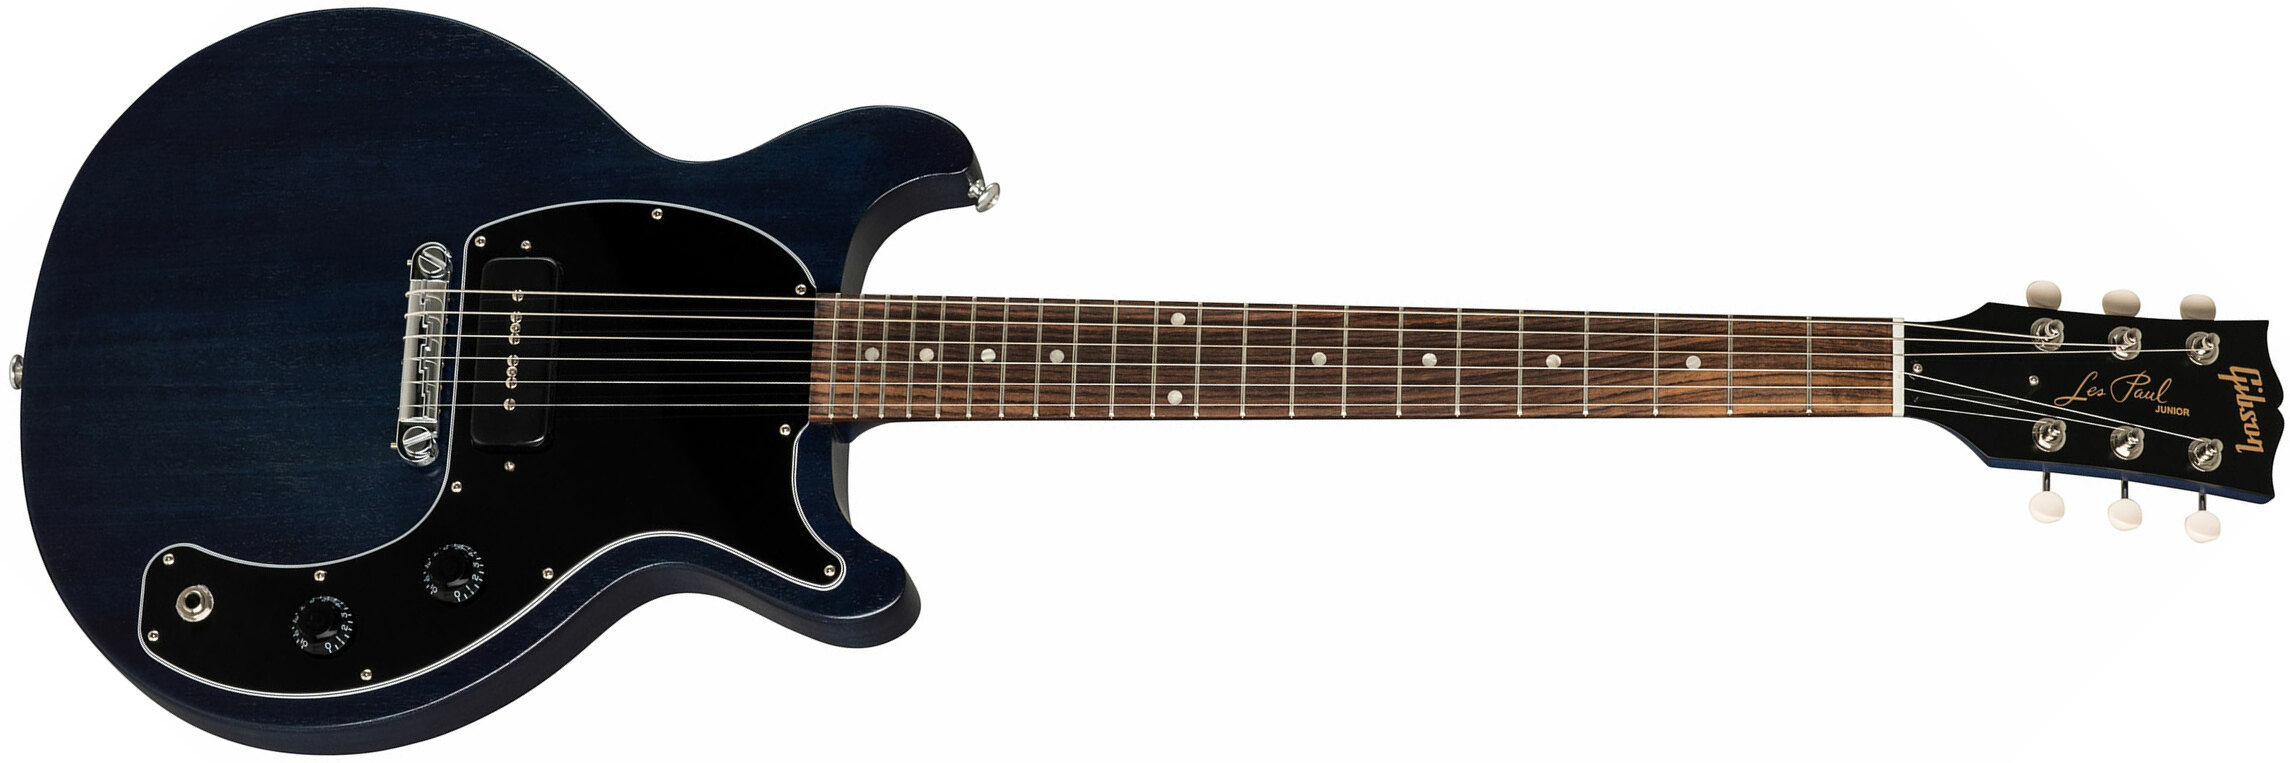 Gibson Les Paul Junior Tribute 2019 P90 Ht Rw - Blue Stain - Single cut electric guitar - Main picture